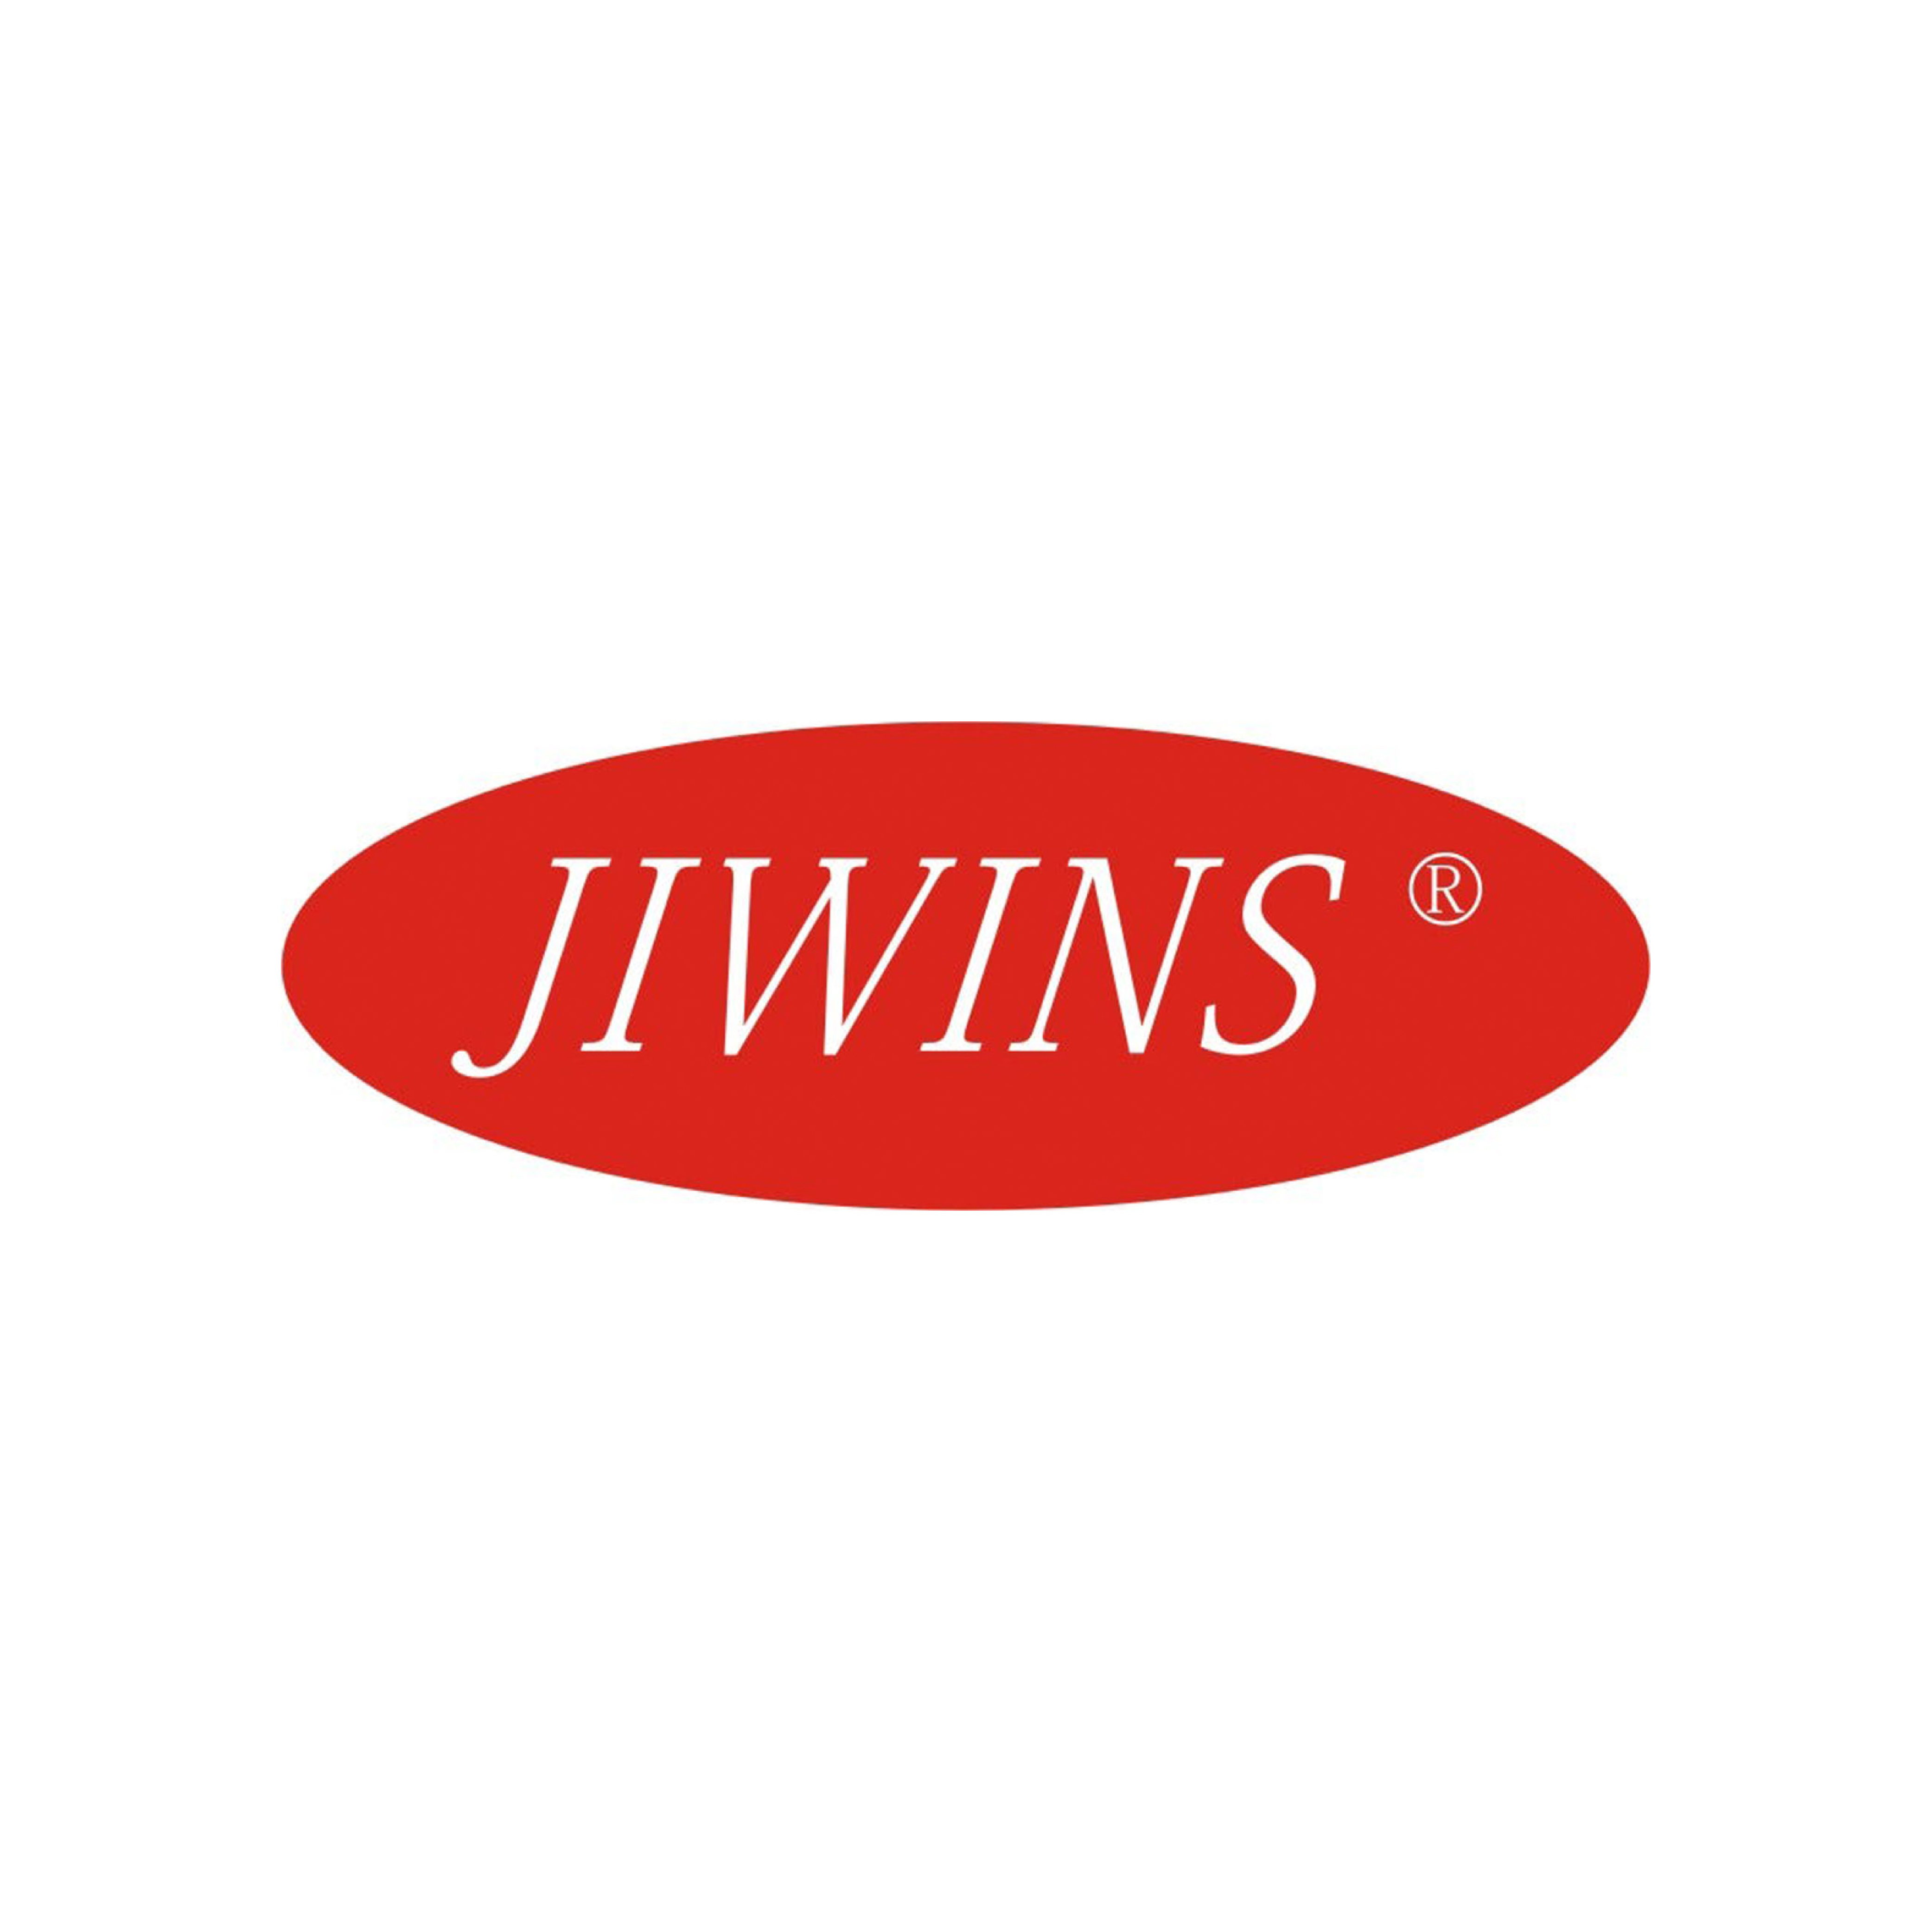 Jiwins